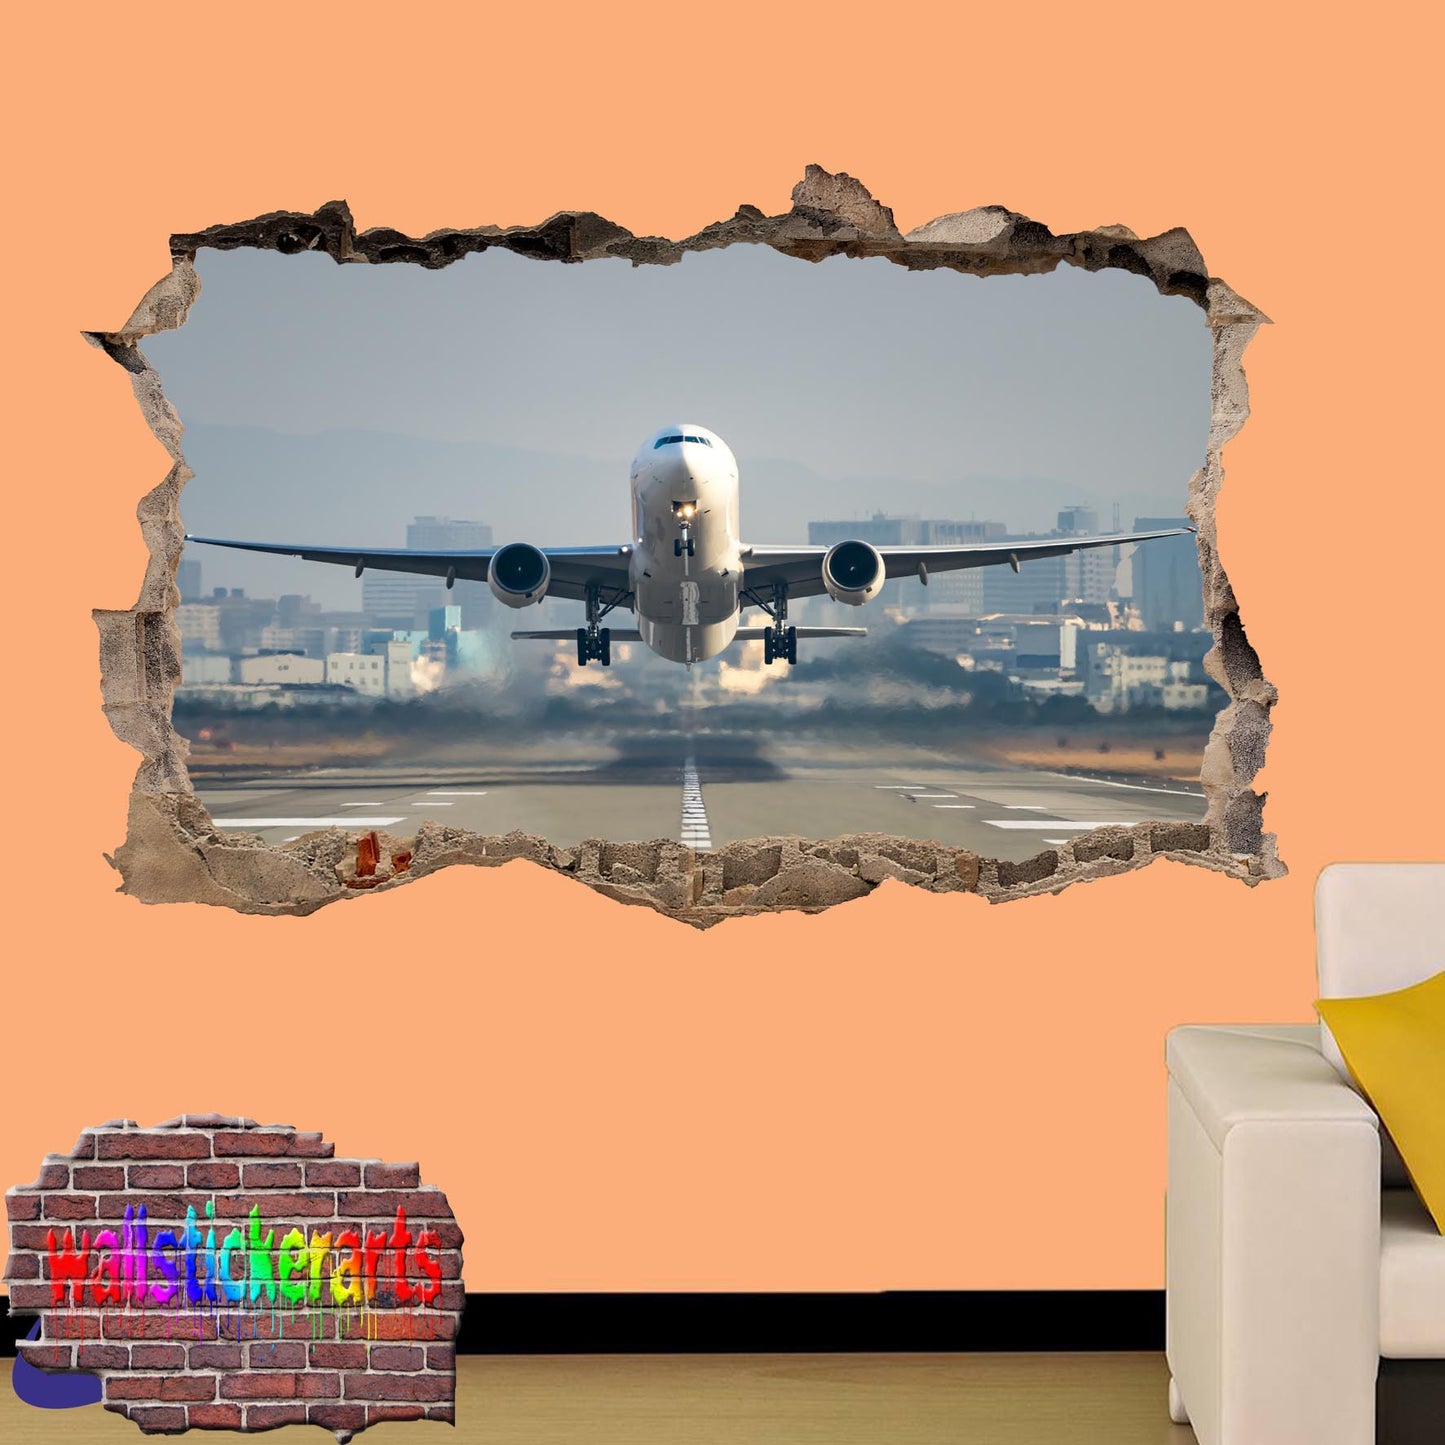 Boeing Passenger Airplane Runway Takeoff 3d Art Effect Wall Sticker Room Office Nursery Shop Decoration Decal Mural YS9